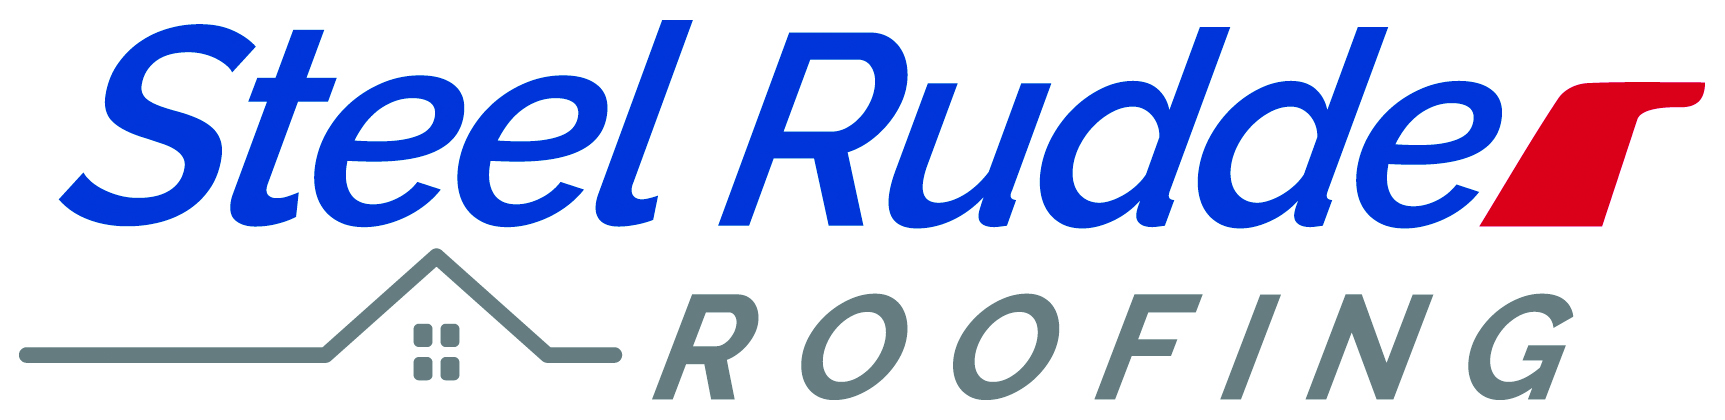 Steel Rudder Roofing, LLC Logo